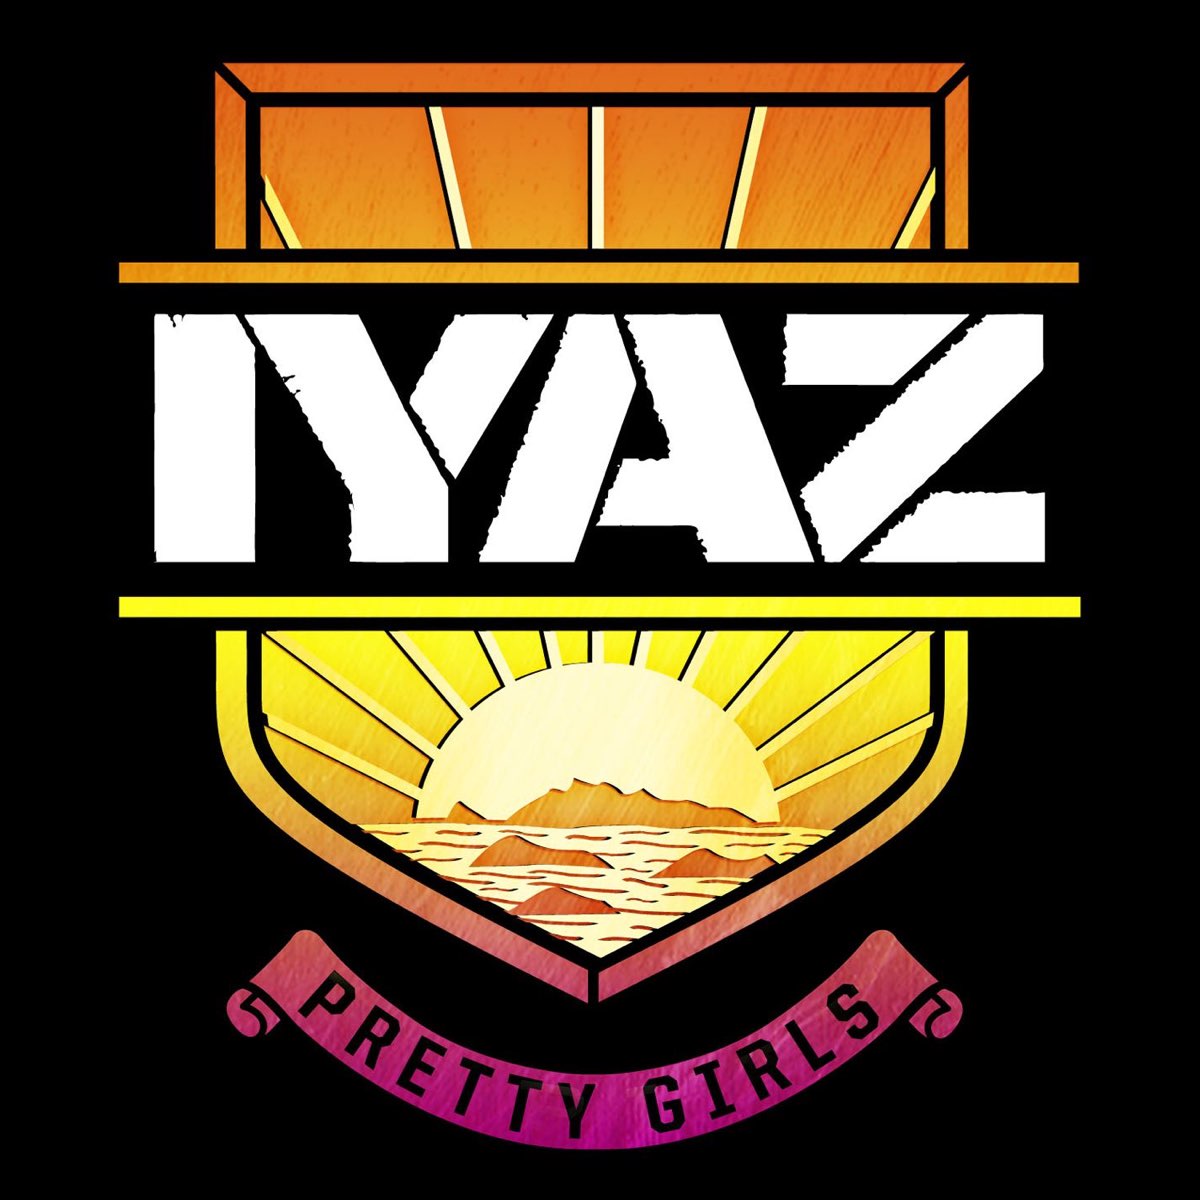 Iyaz ft. featuring Travie McCoy Pretty Girls cover artwork